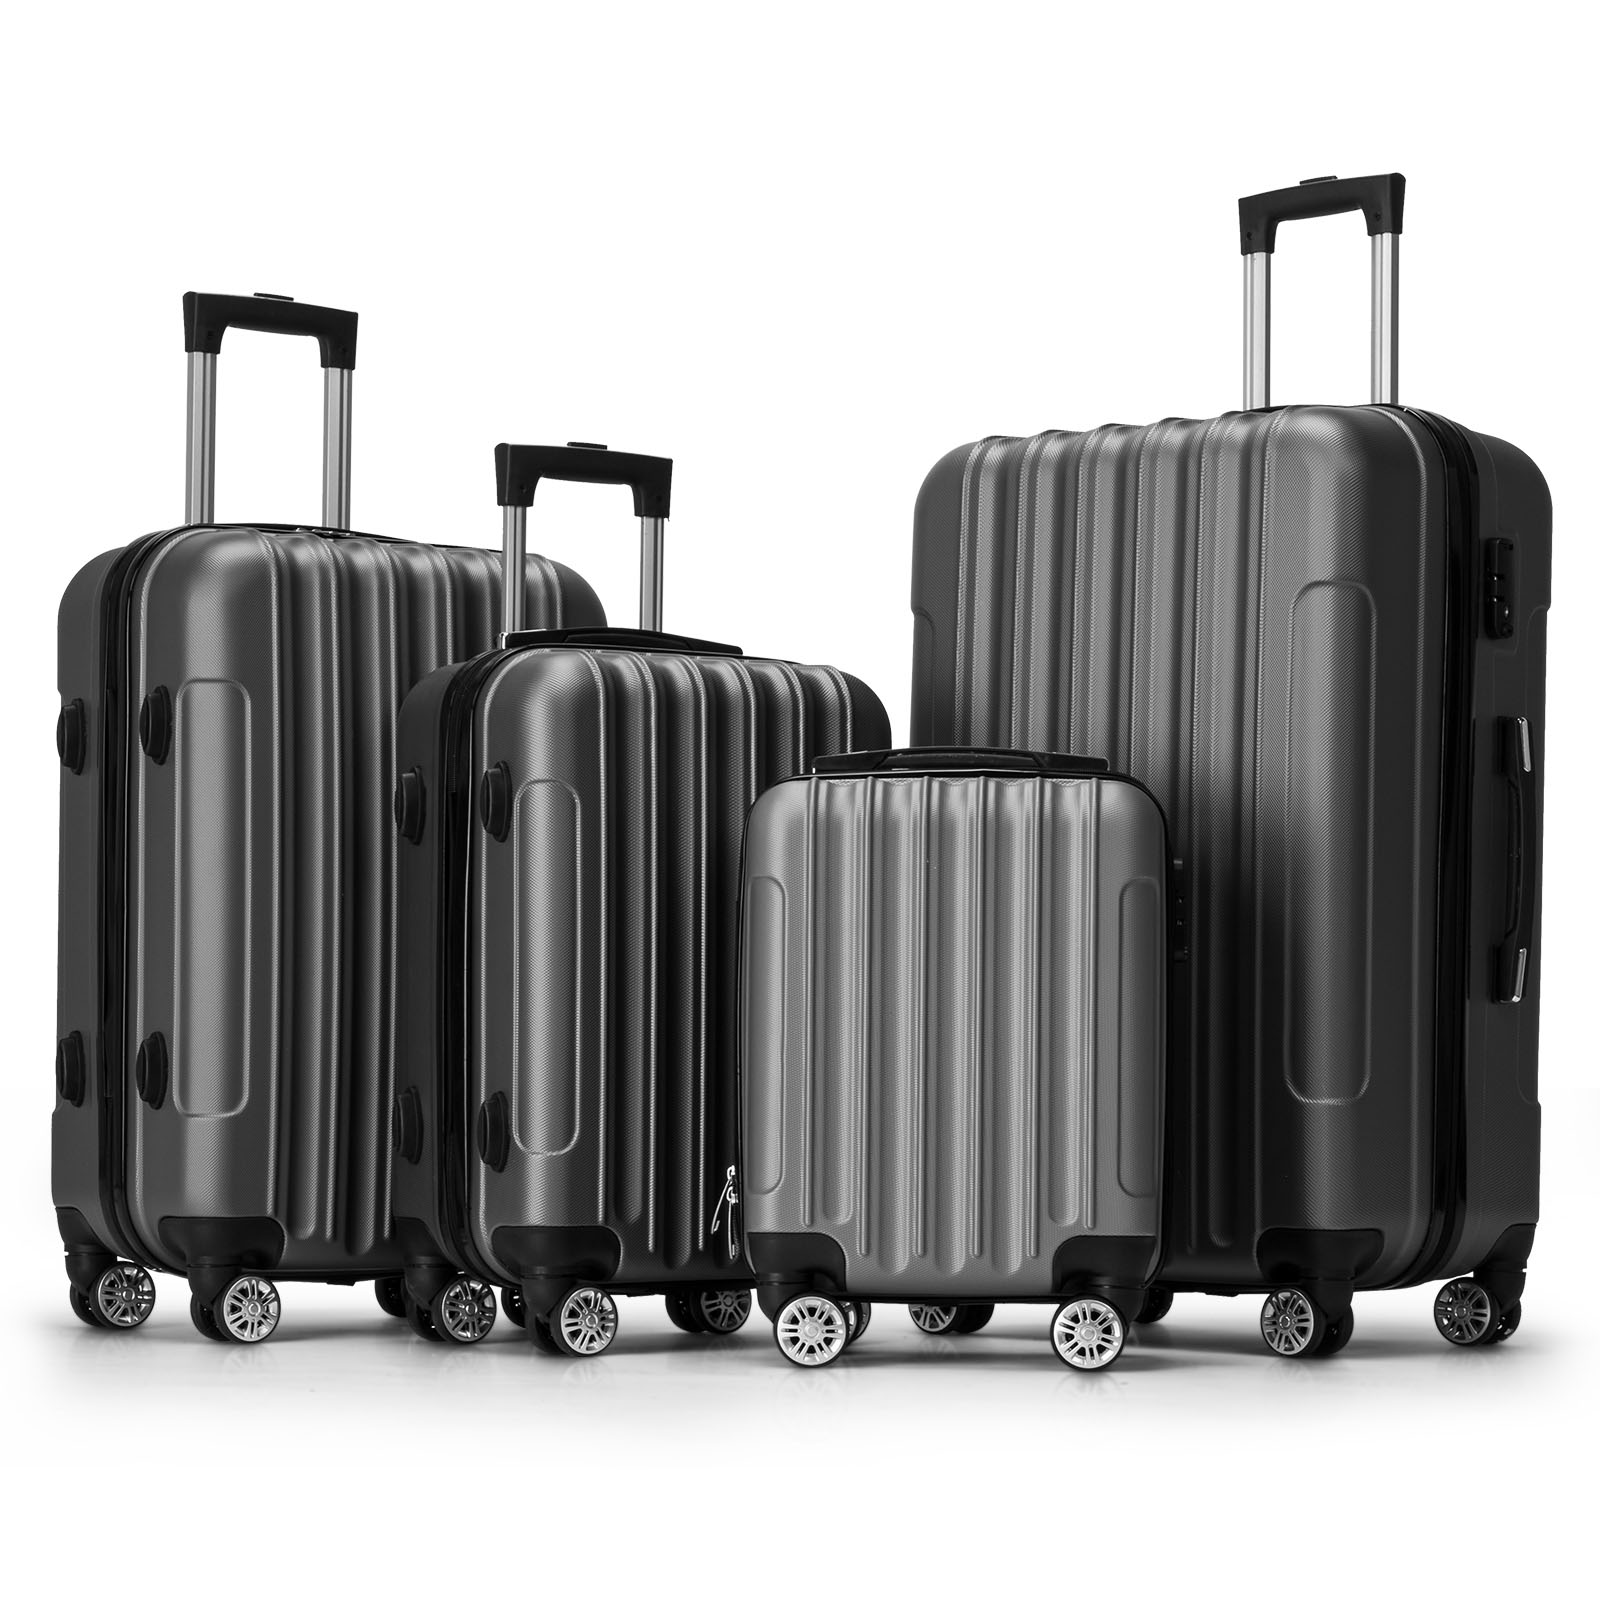 Zimtown 4 Piece Luggage Set, ABS Hard Shell Suitcase Luggage Sets Double Wheels with TSA Lock, Dark Gray - image 1 of 12